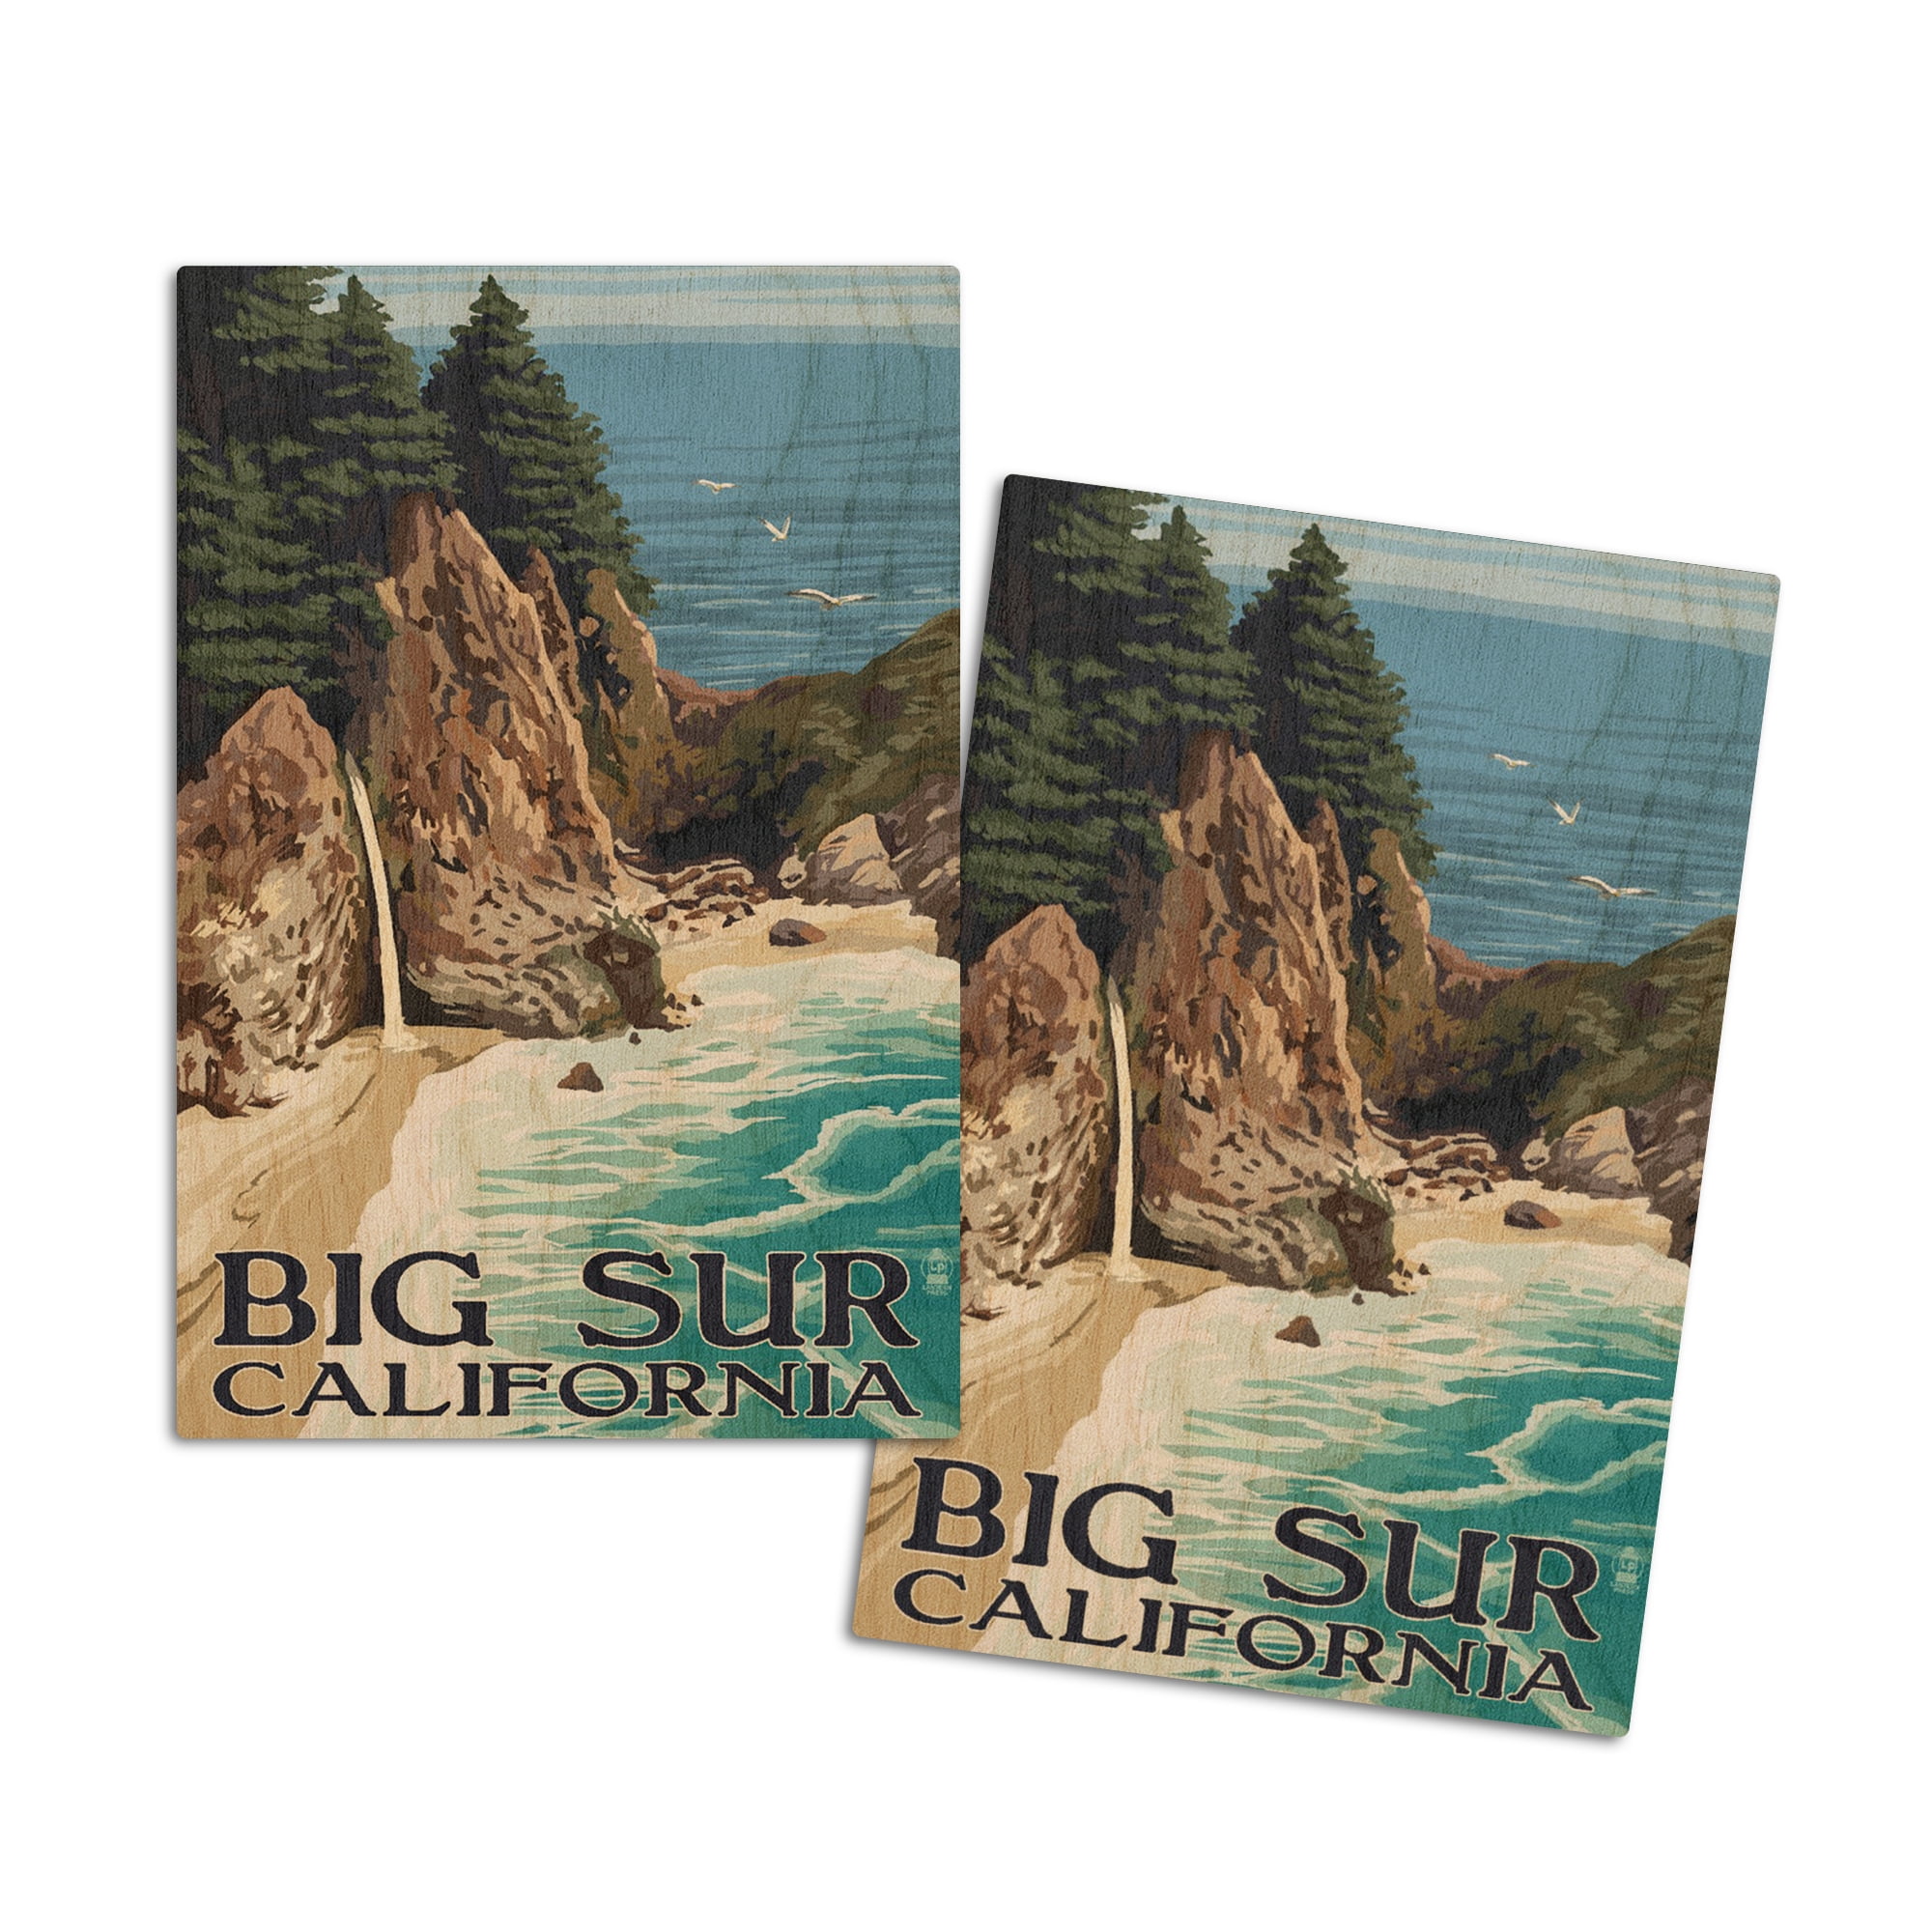 Big Sur California McWay Falls United States Travel Advertisement Poster 